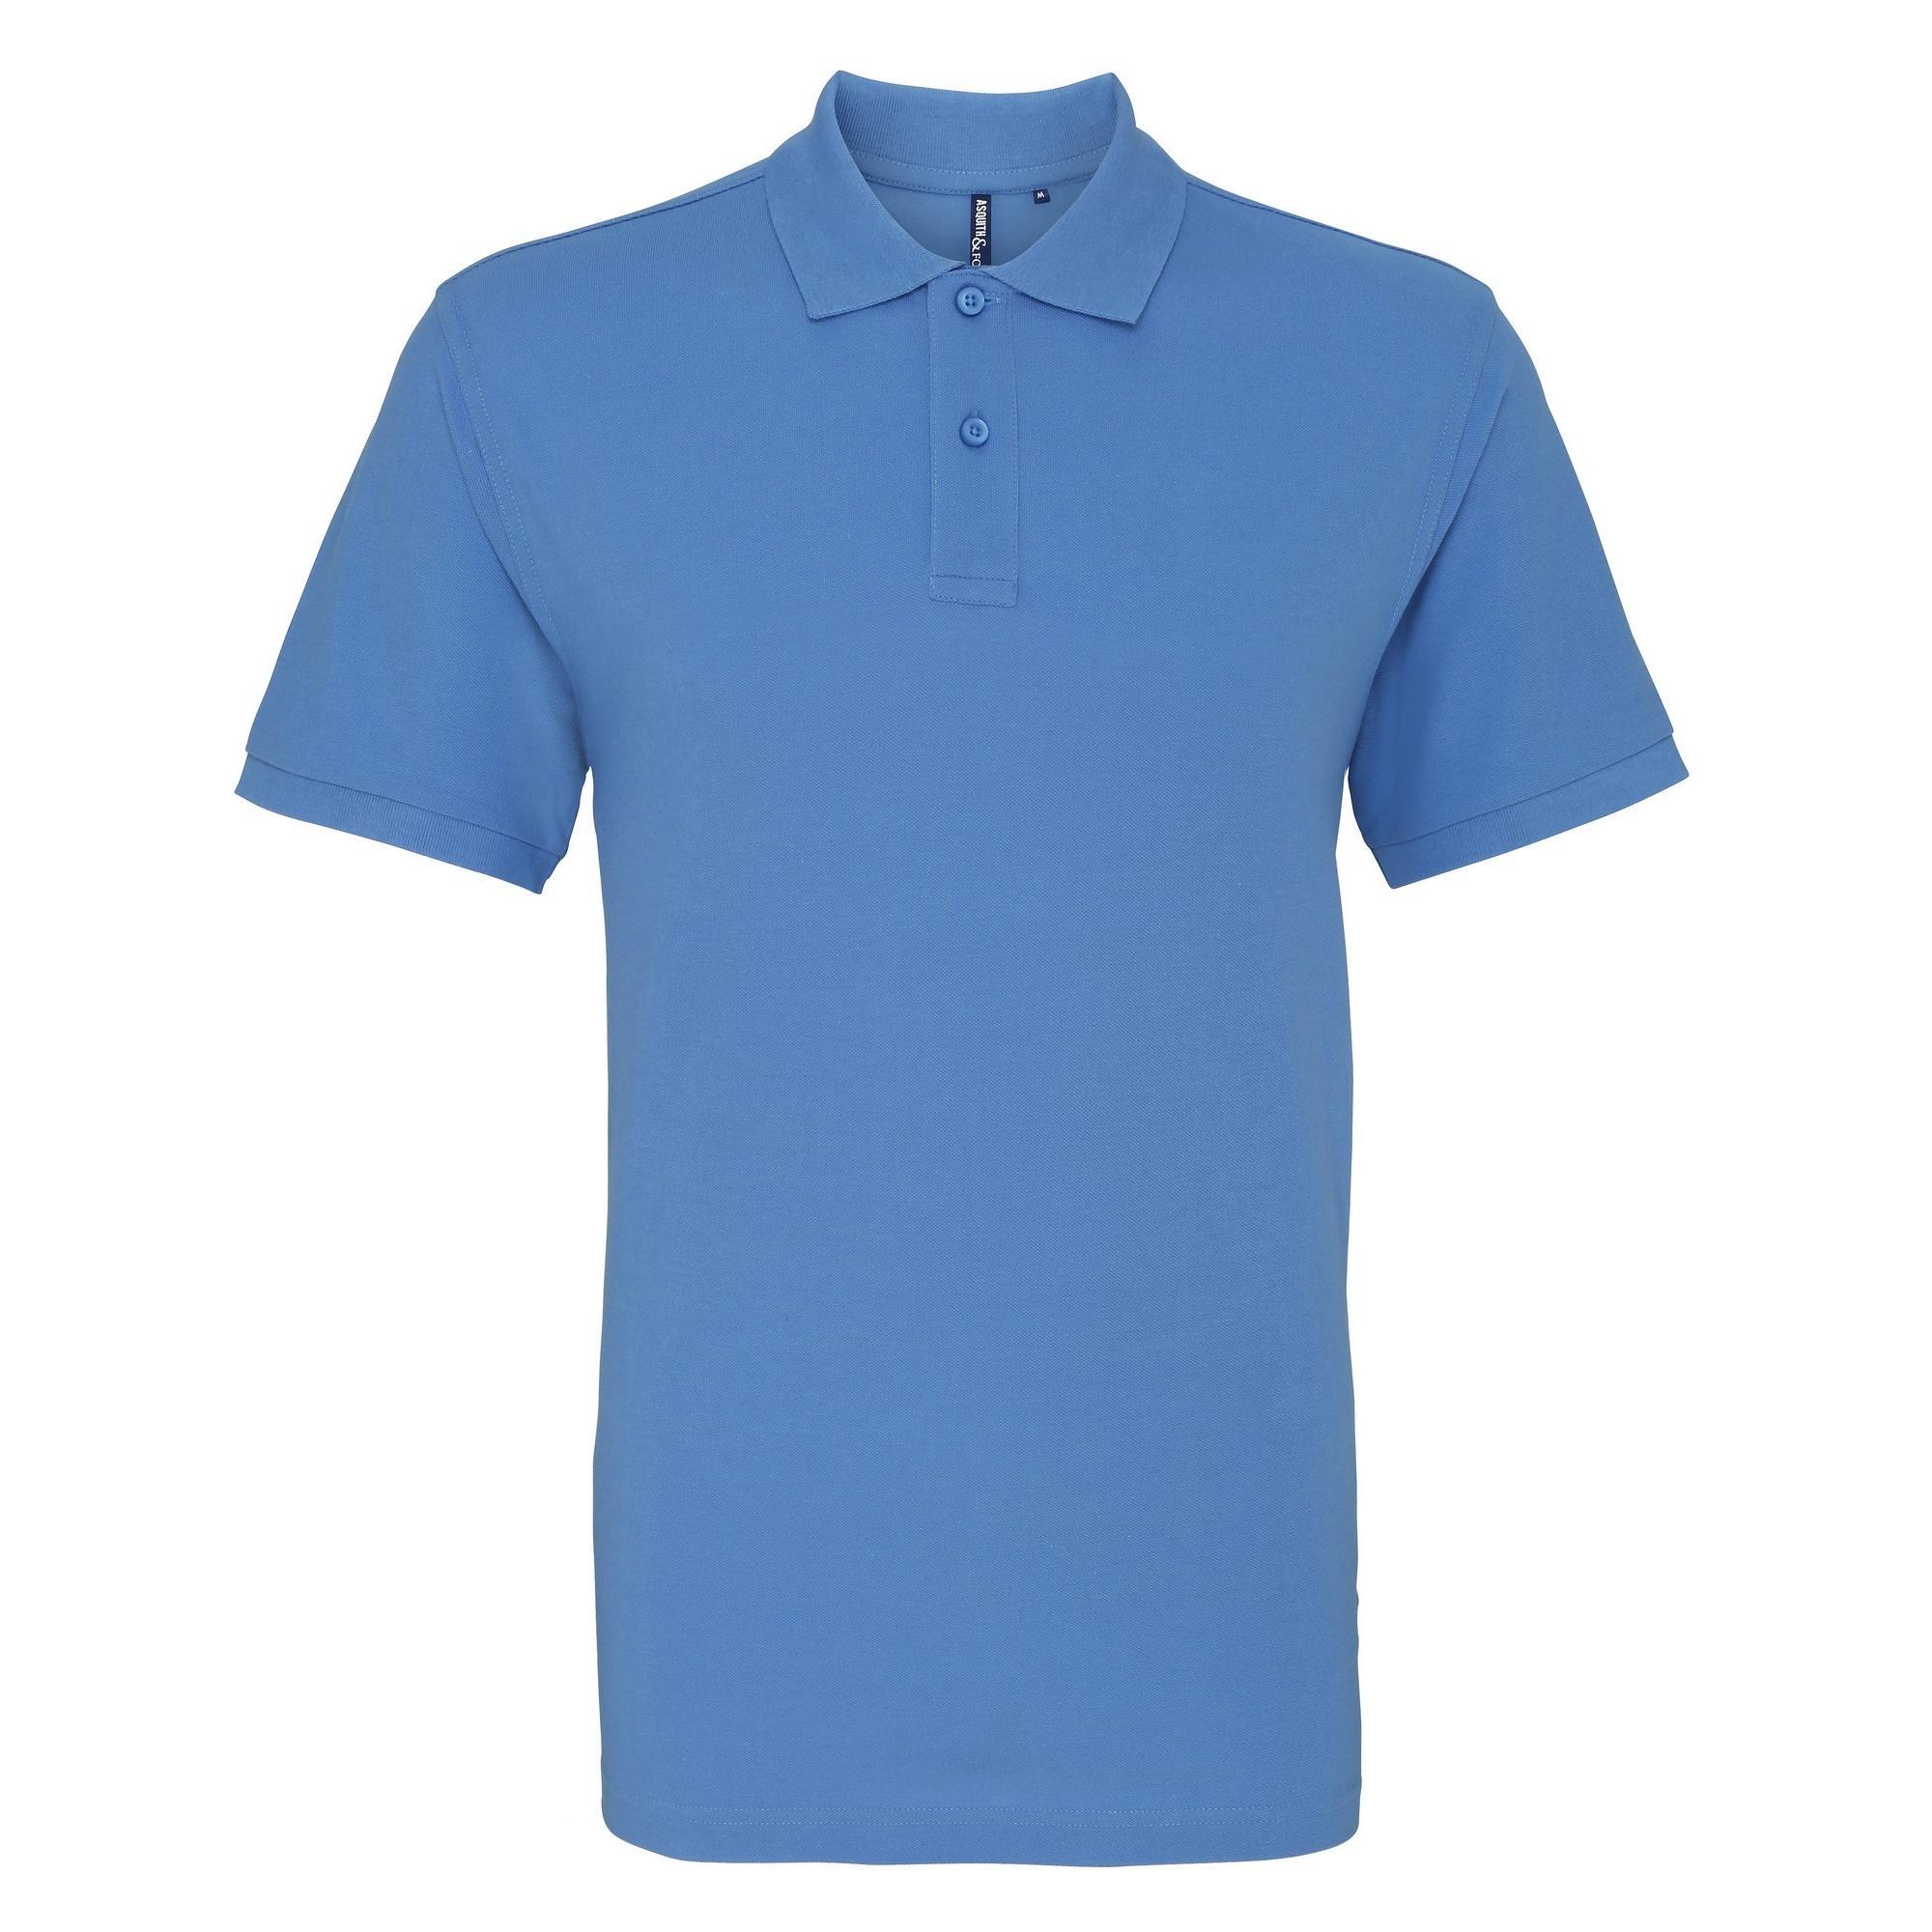 Asquith & Fox Mens Plain Short Sleeve Polo Shirt (Cornflower) (S)